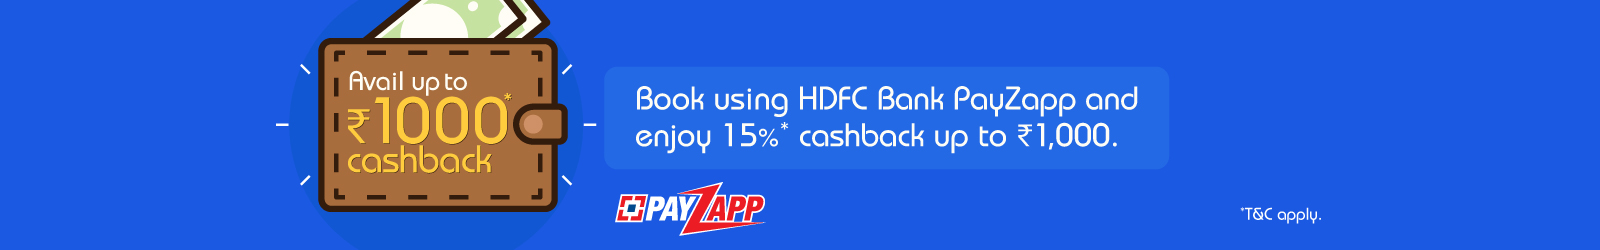 HDFC Bank PayZapp Flight Offers & Discounts - IndiGo